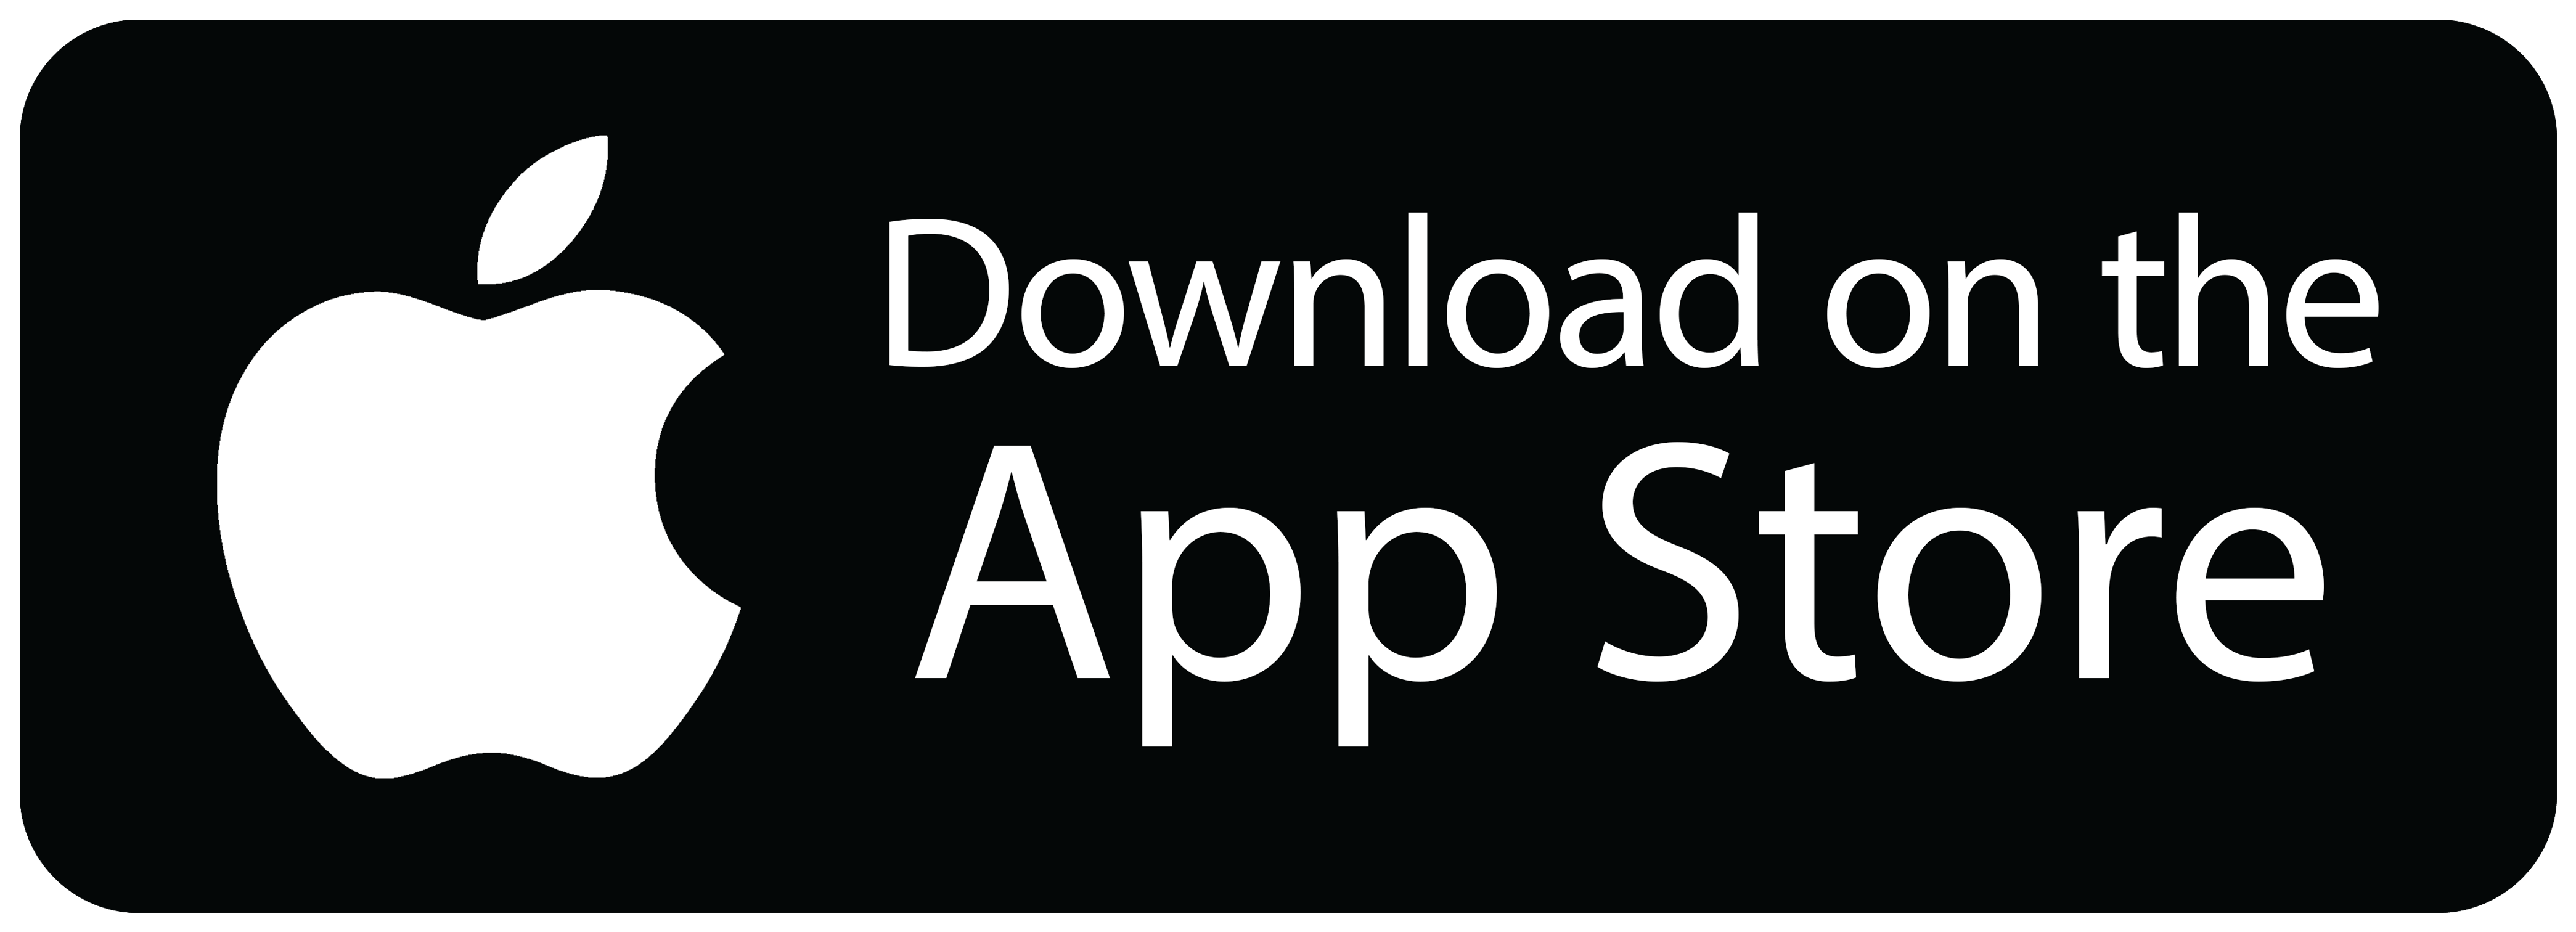 Testivator iOS Mobile Application